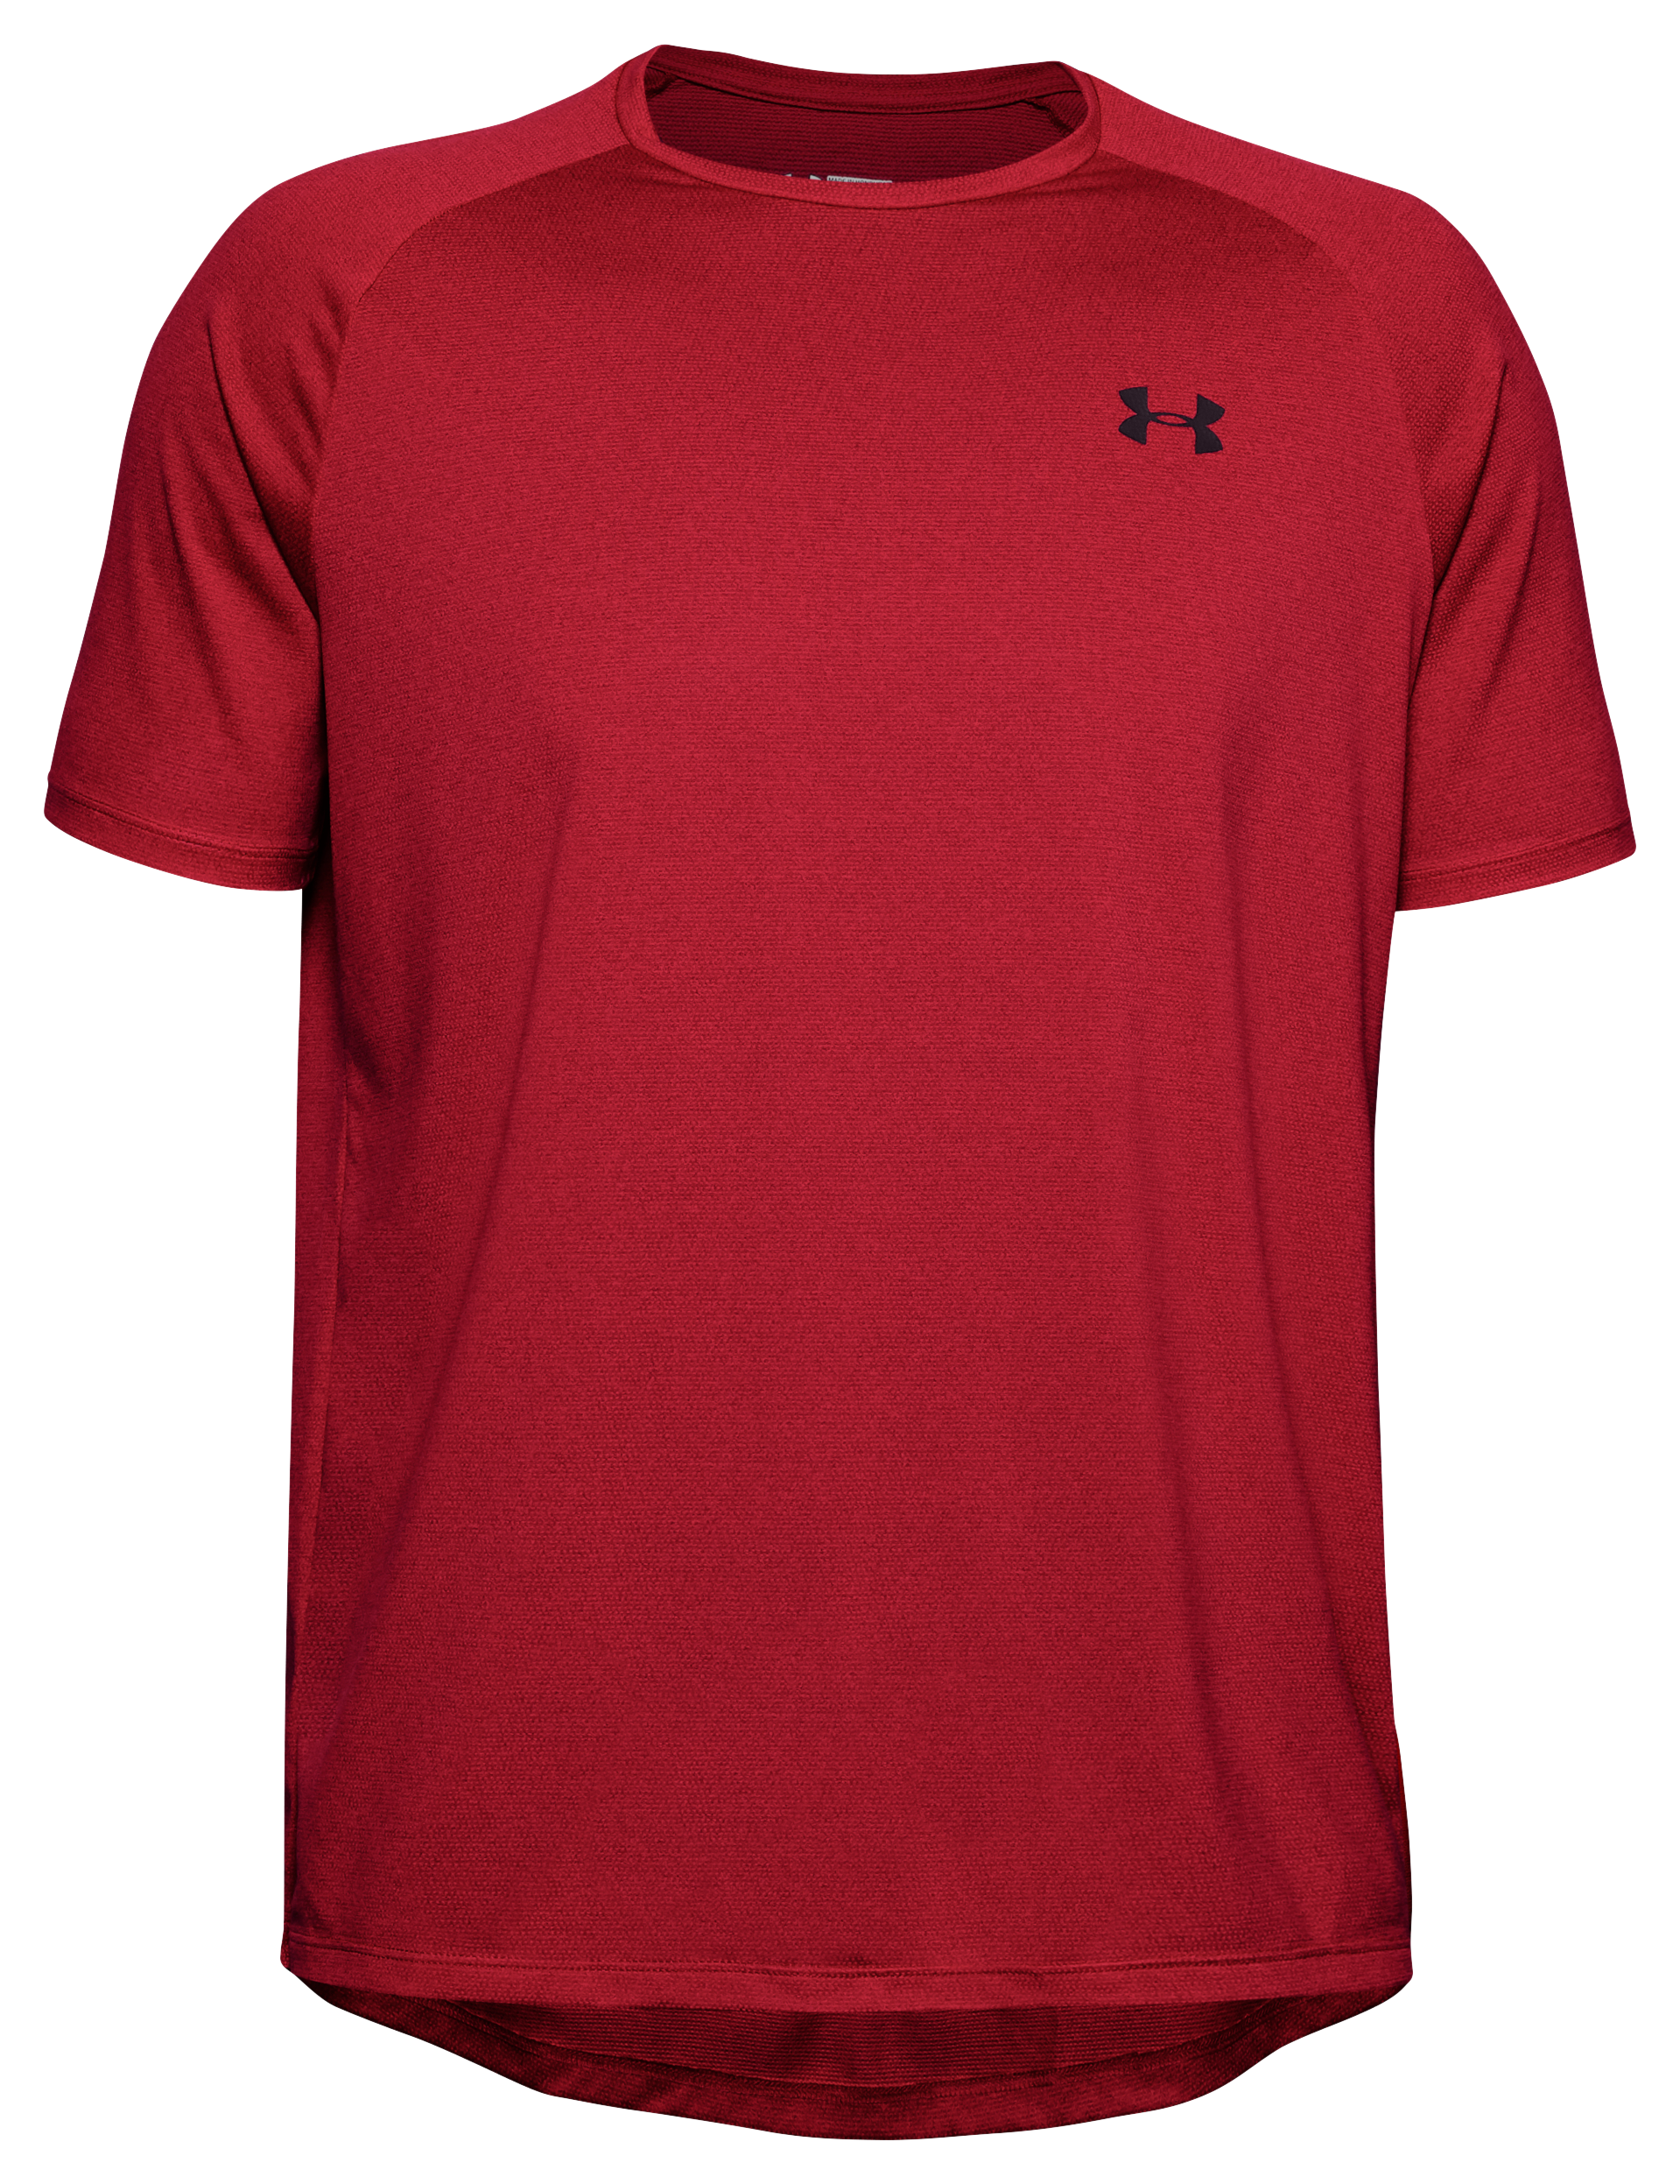 Under Armour UA Tech 2.0 Short-Sleeve T-Shirt for Men - Red/Black - 2XLT